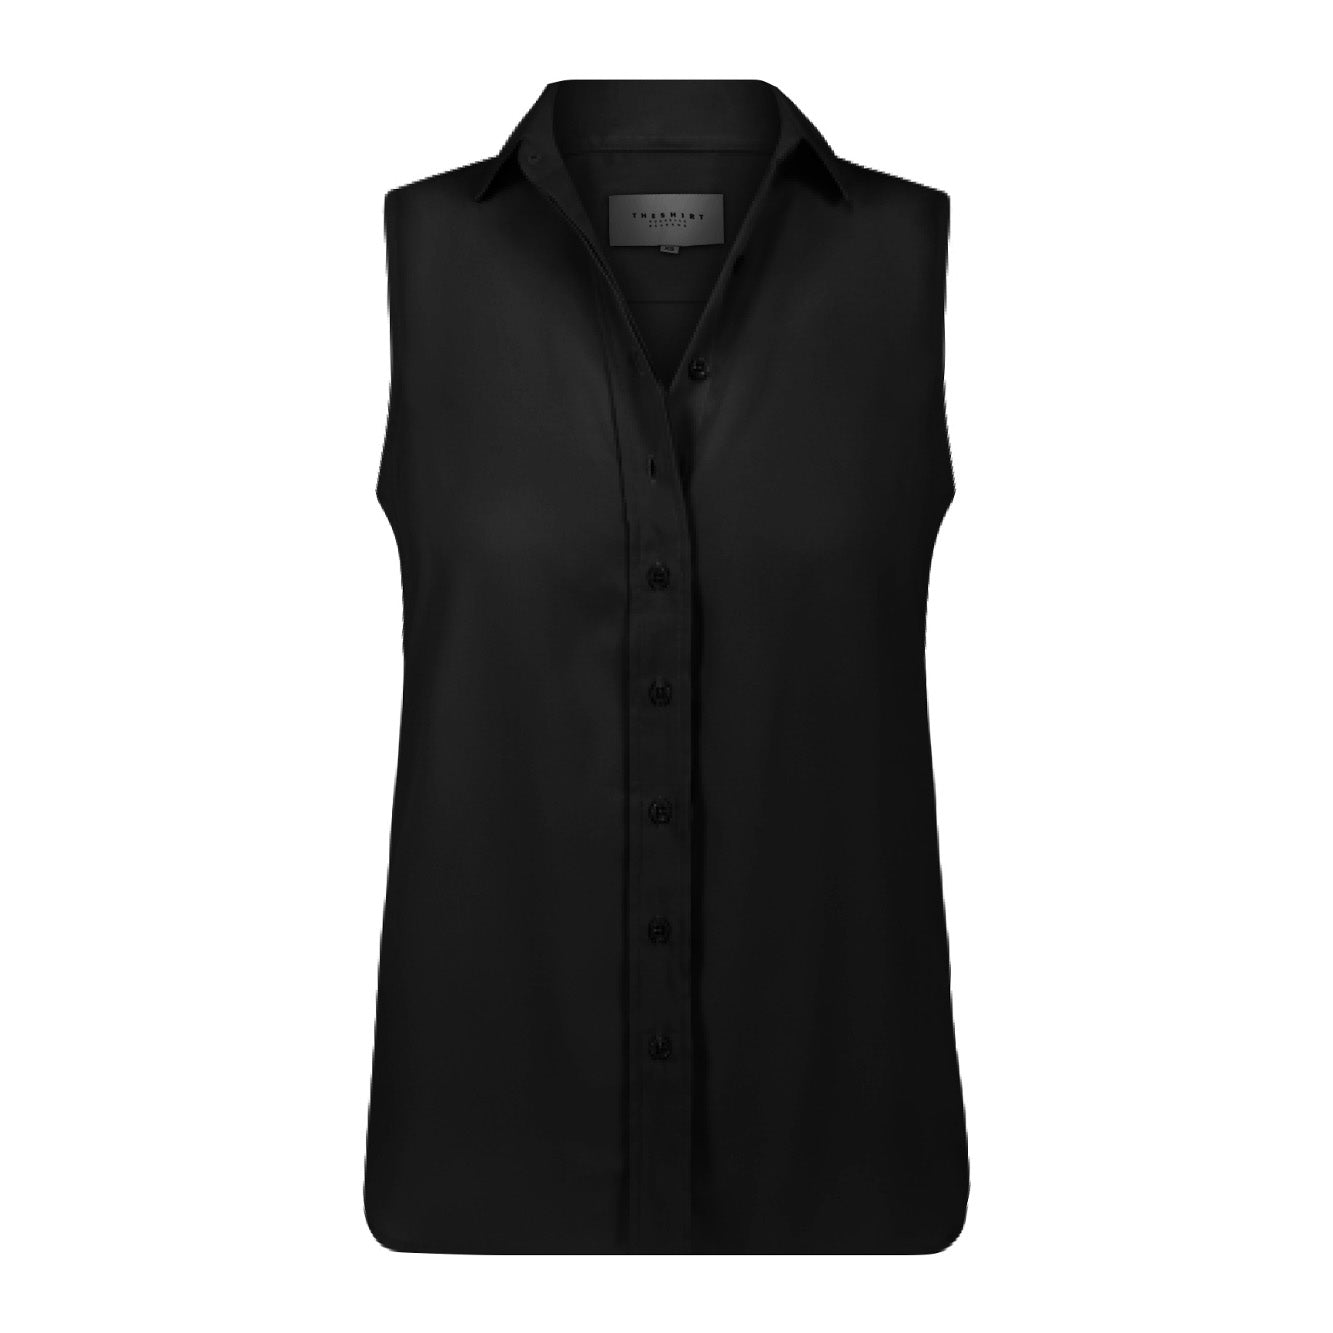 The Shirt by Rochelle Behrens - The Signature Sleeveless Shirt - Black